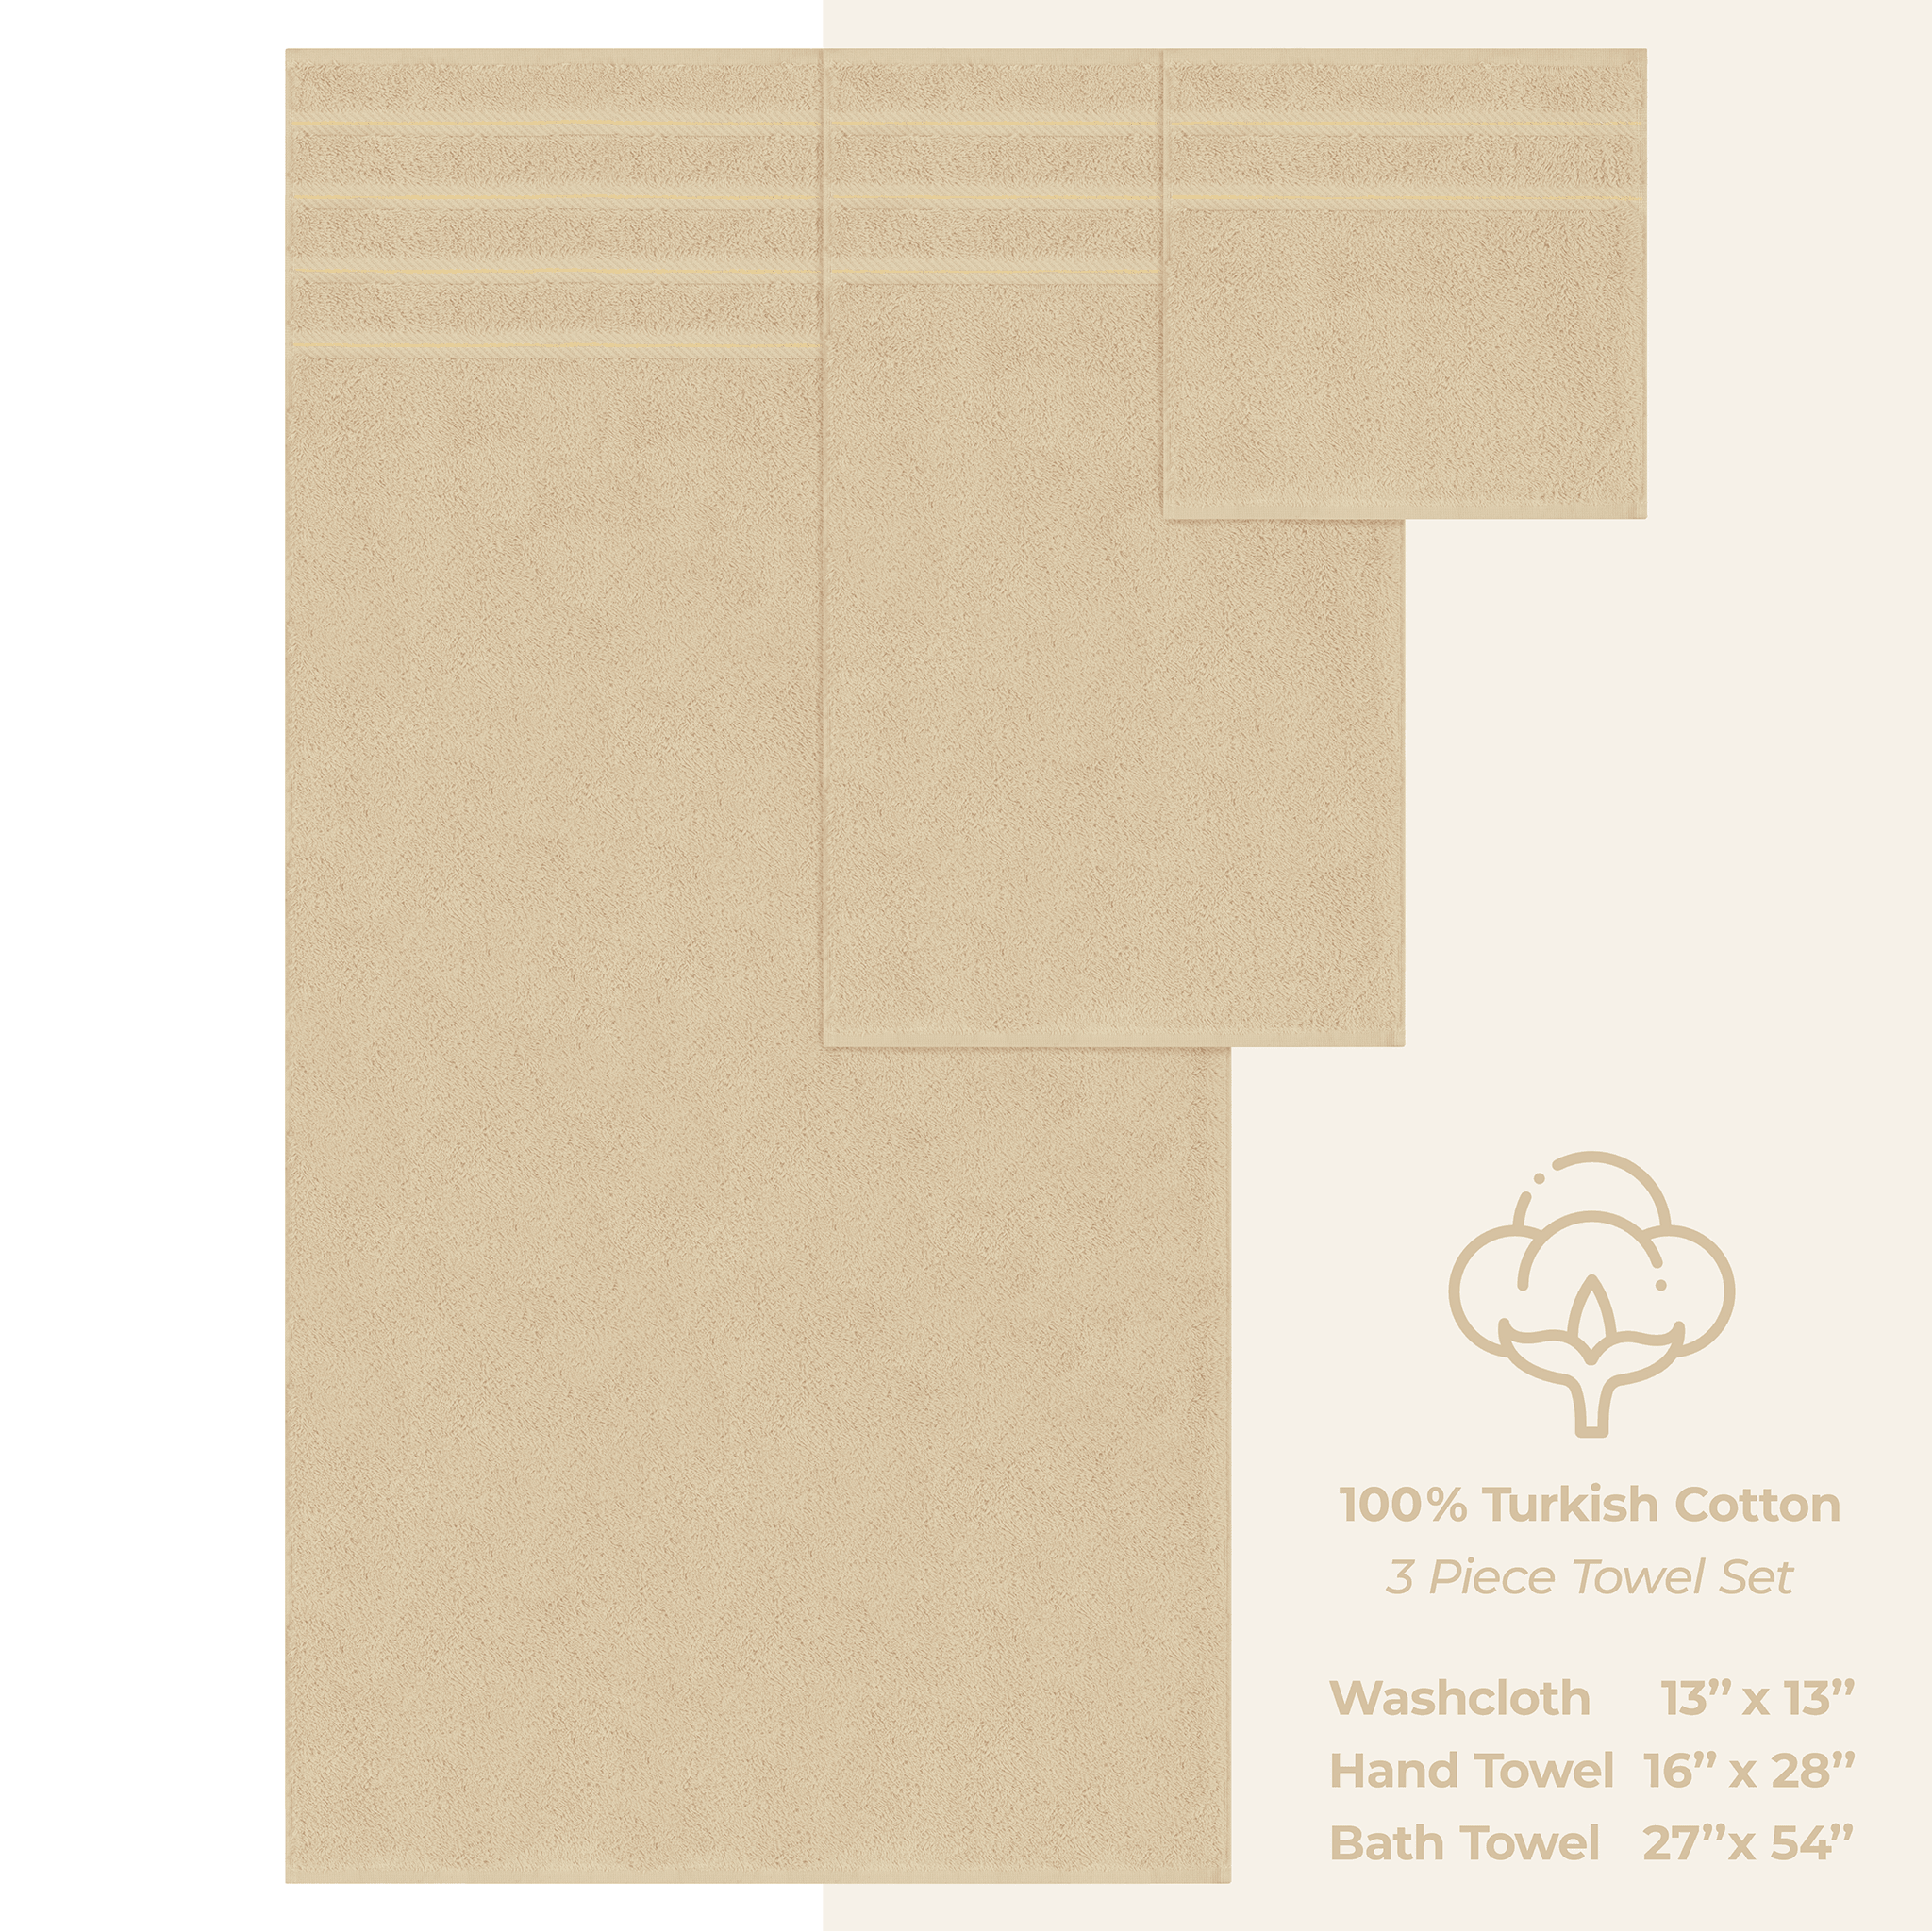 American Soft Linen - 3 Piece Turkish Cotton Towel Set - Sand-Taupe - 4